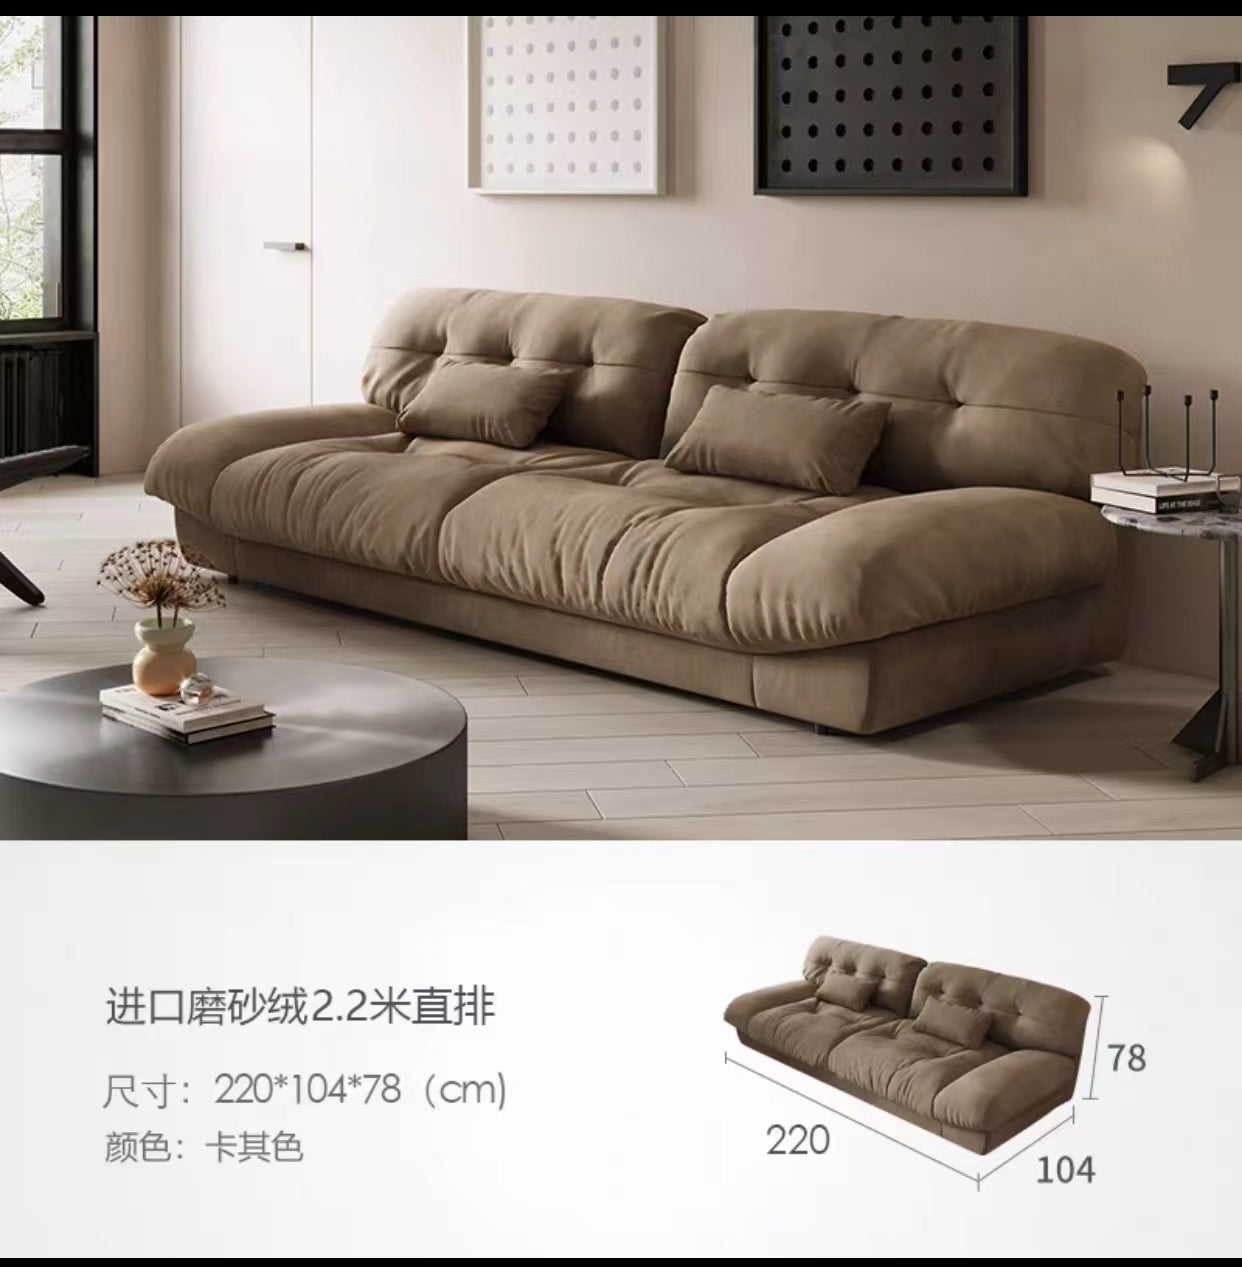 Alecander Sleeper Sofa - 4 Seasons Home Gadgets